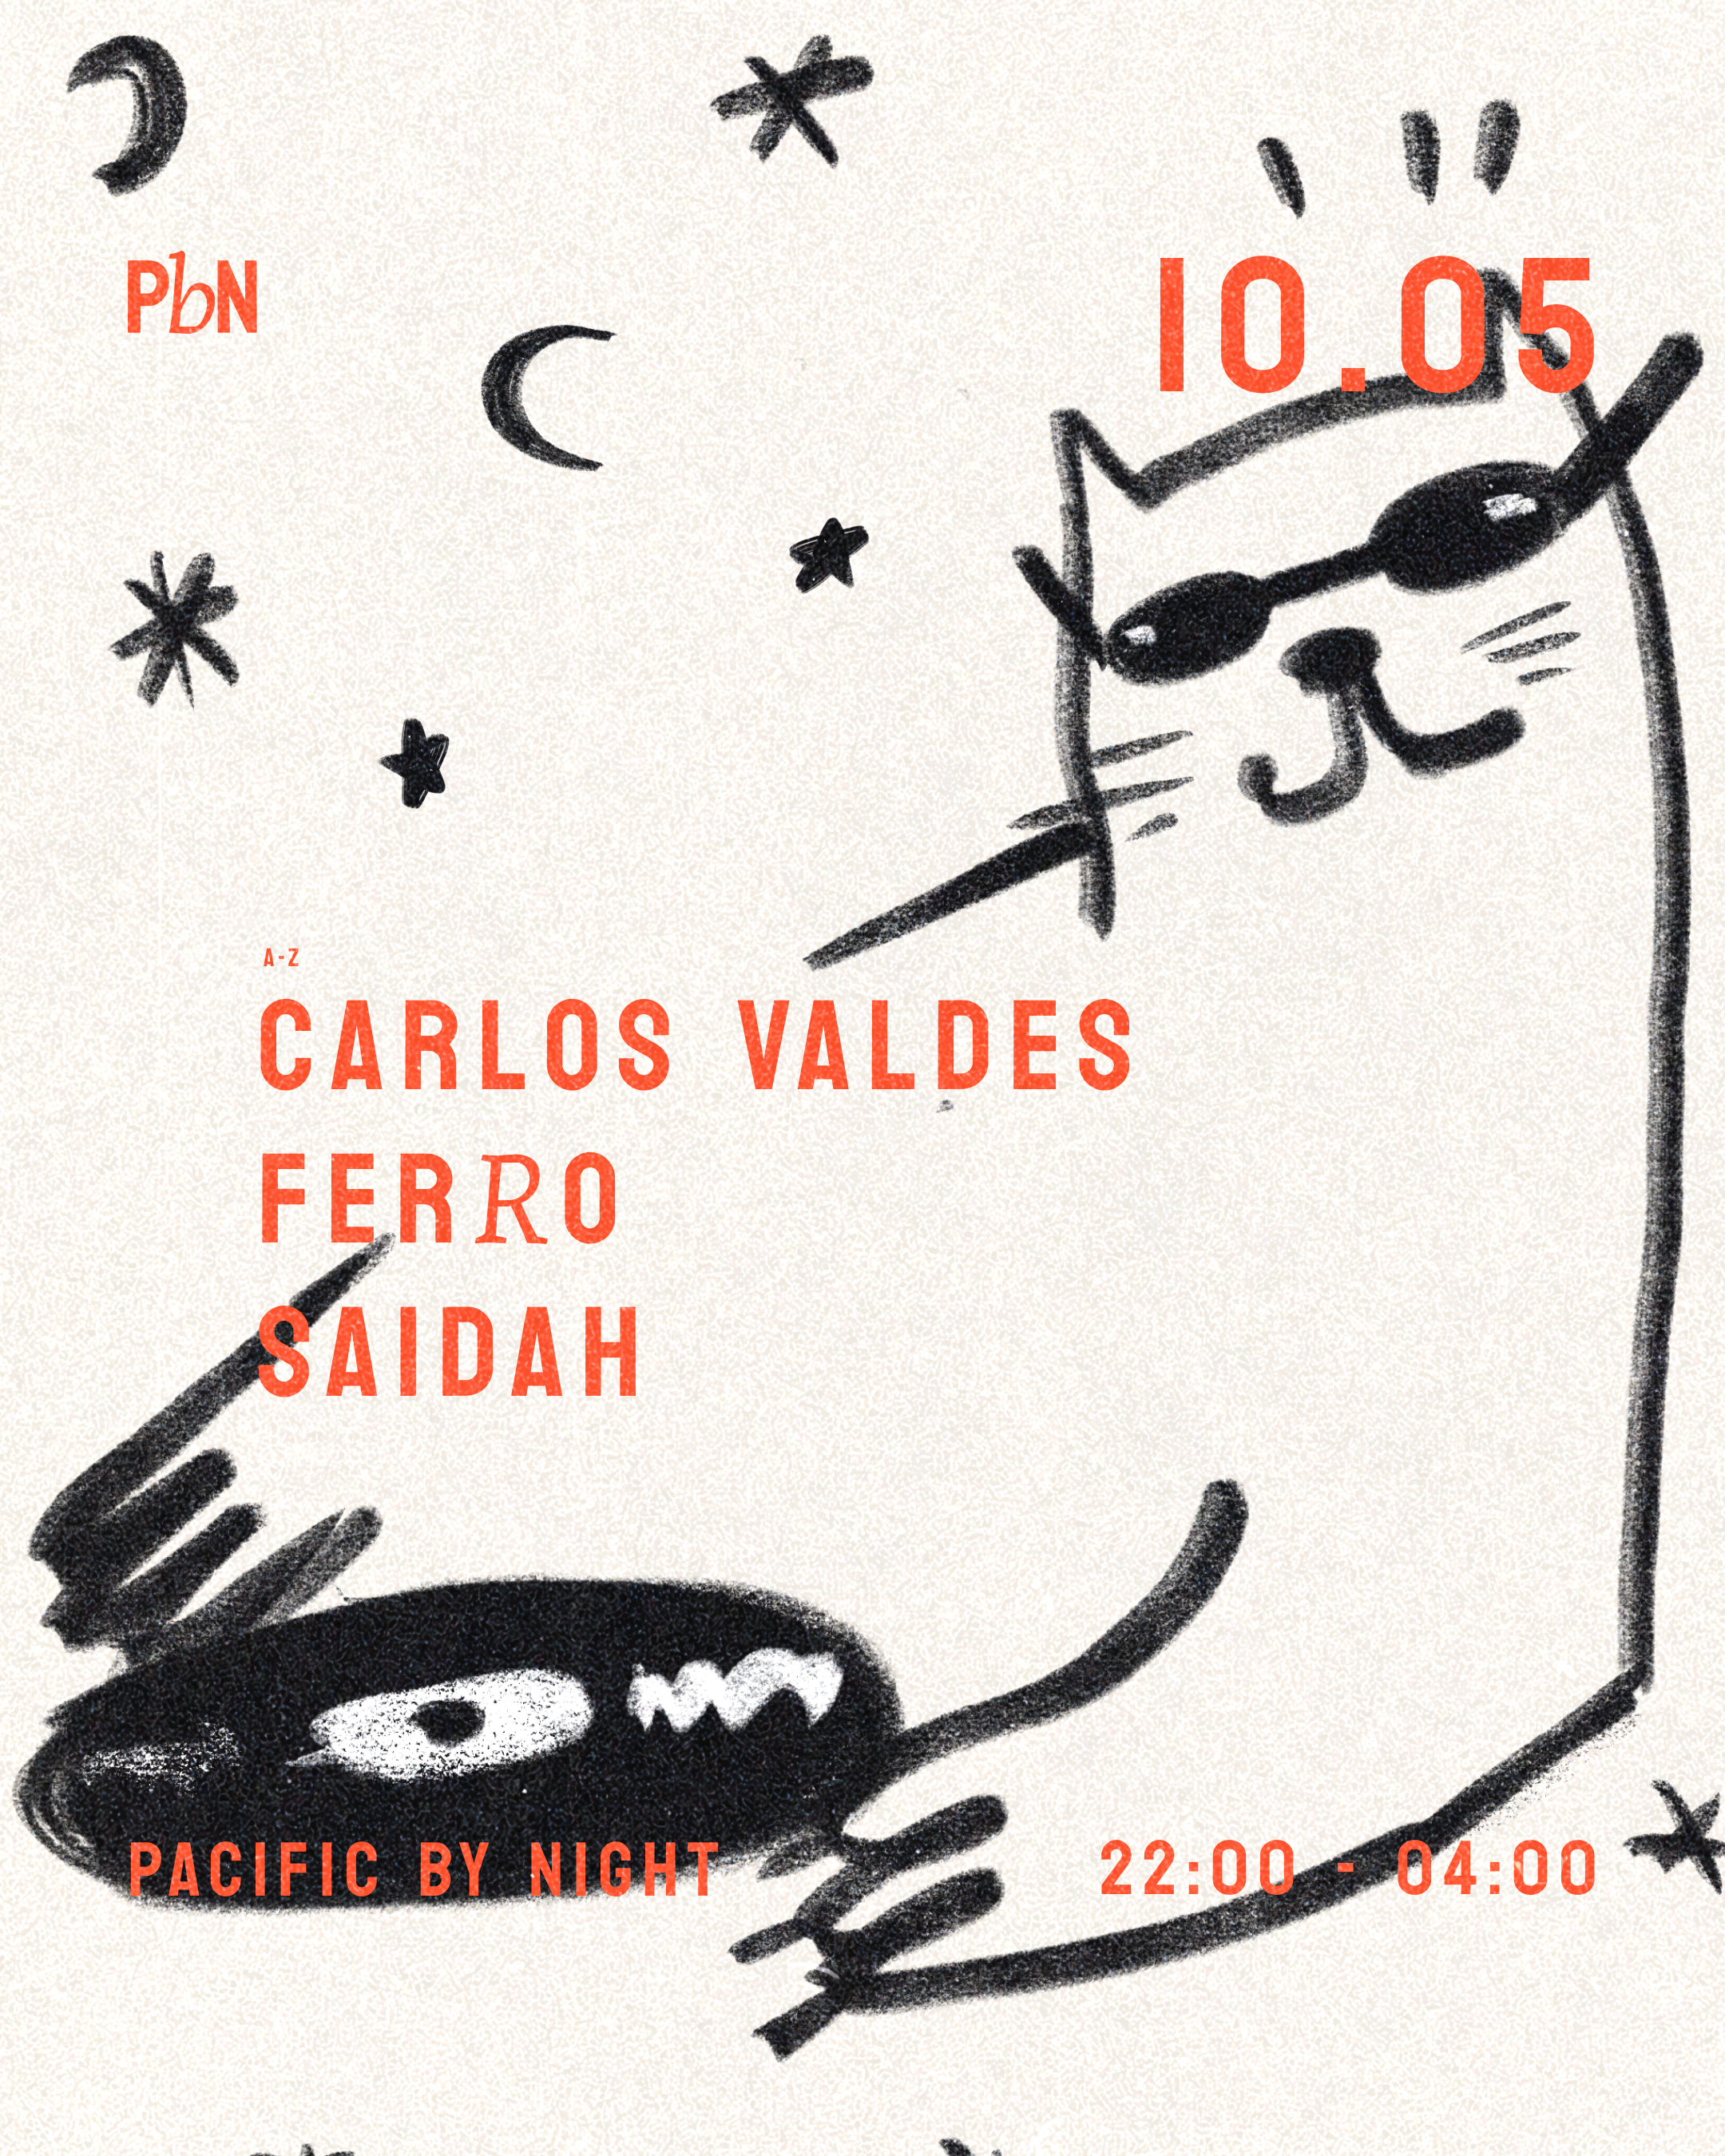 PBN W/ Carlos Valdes, Ferro, Saidah - フライヤー表